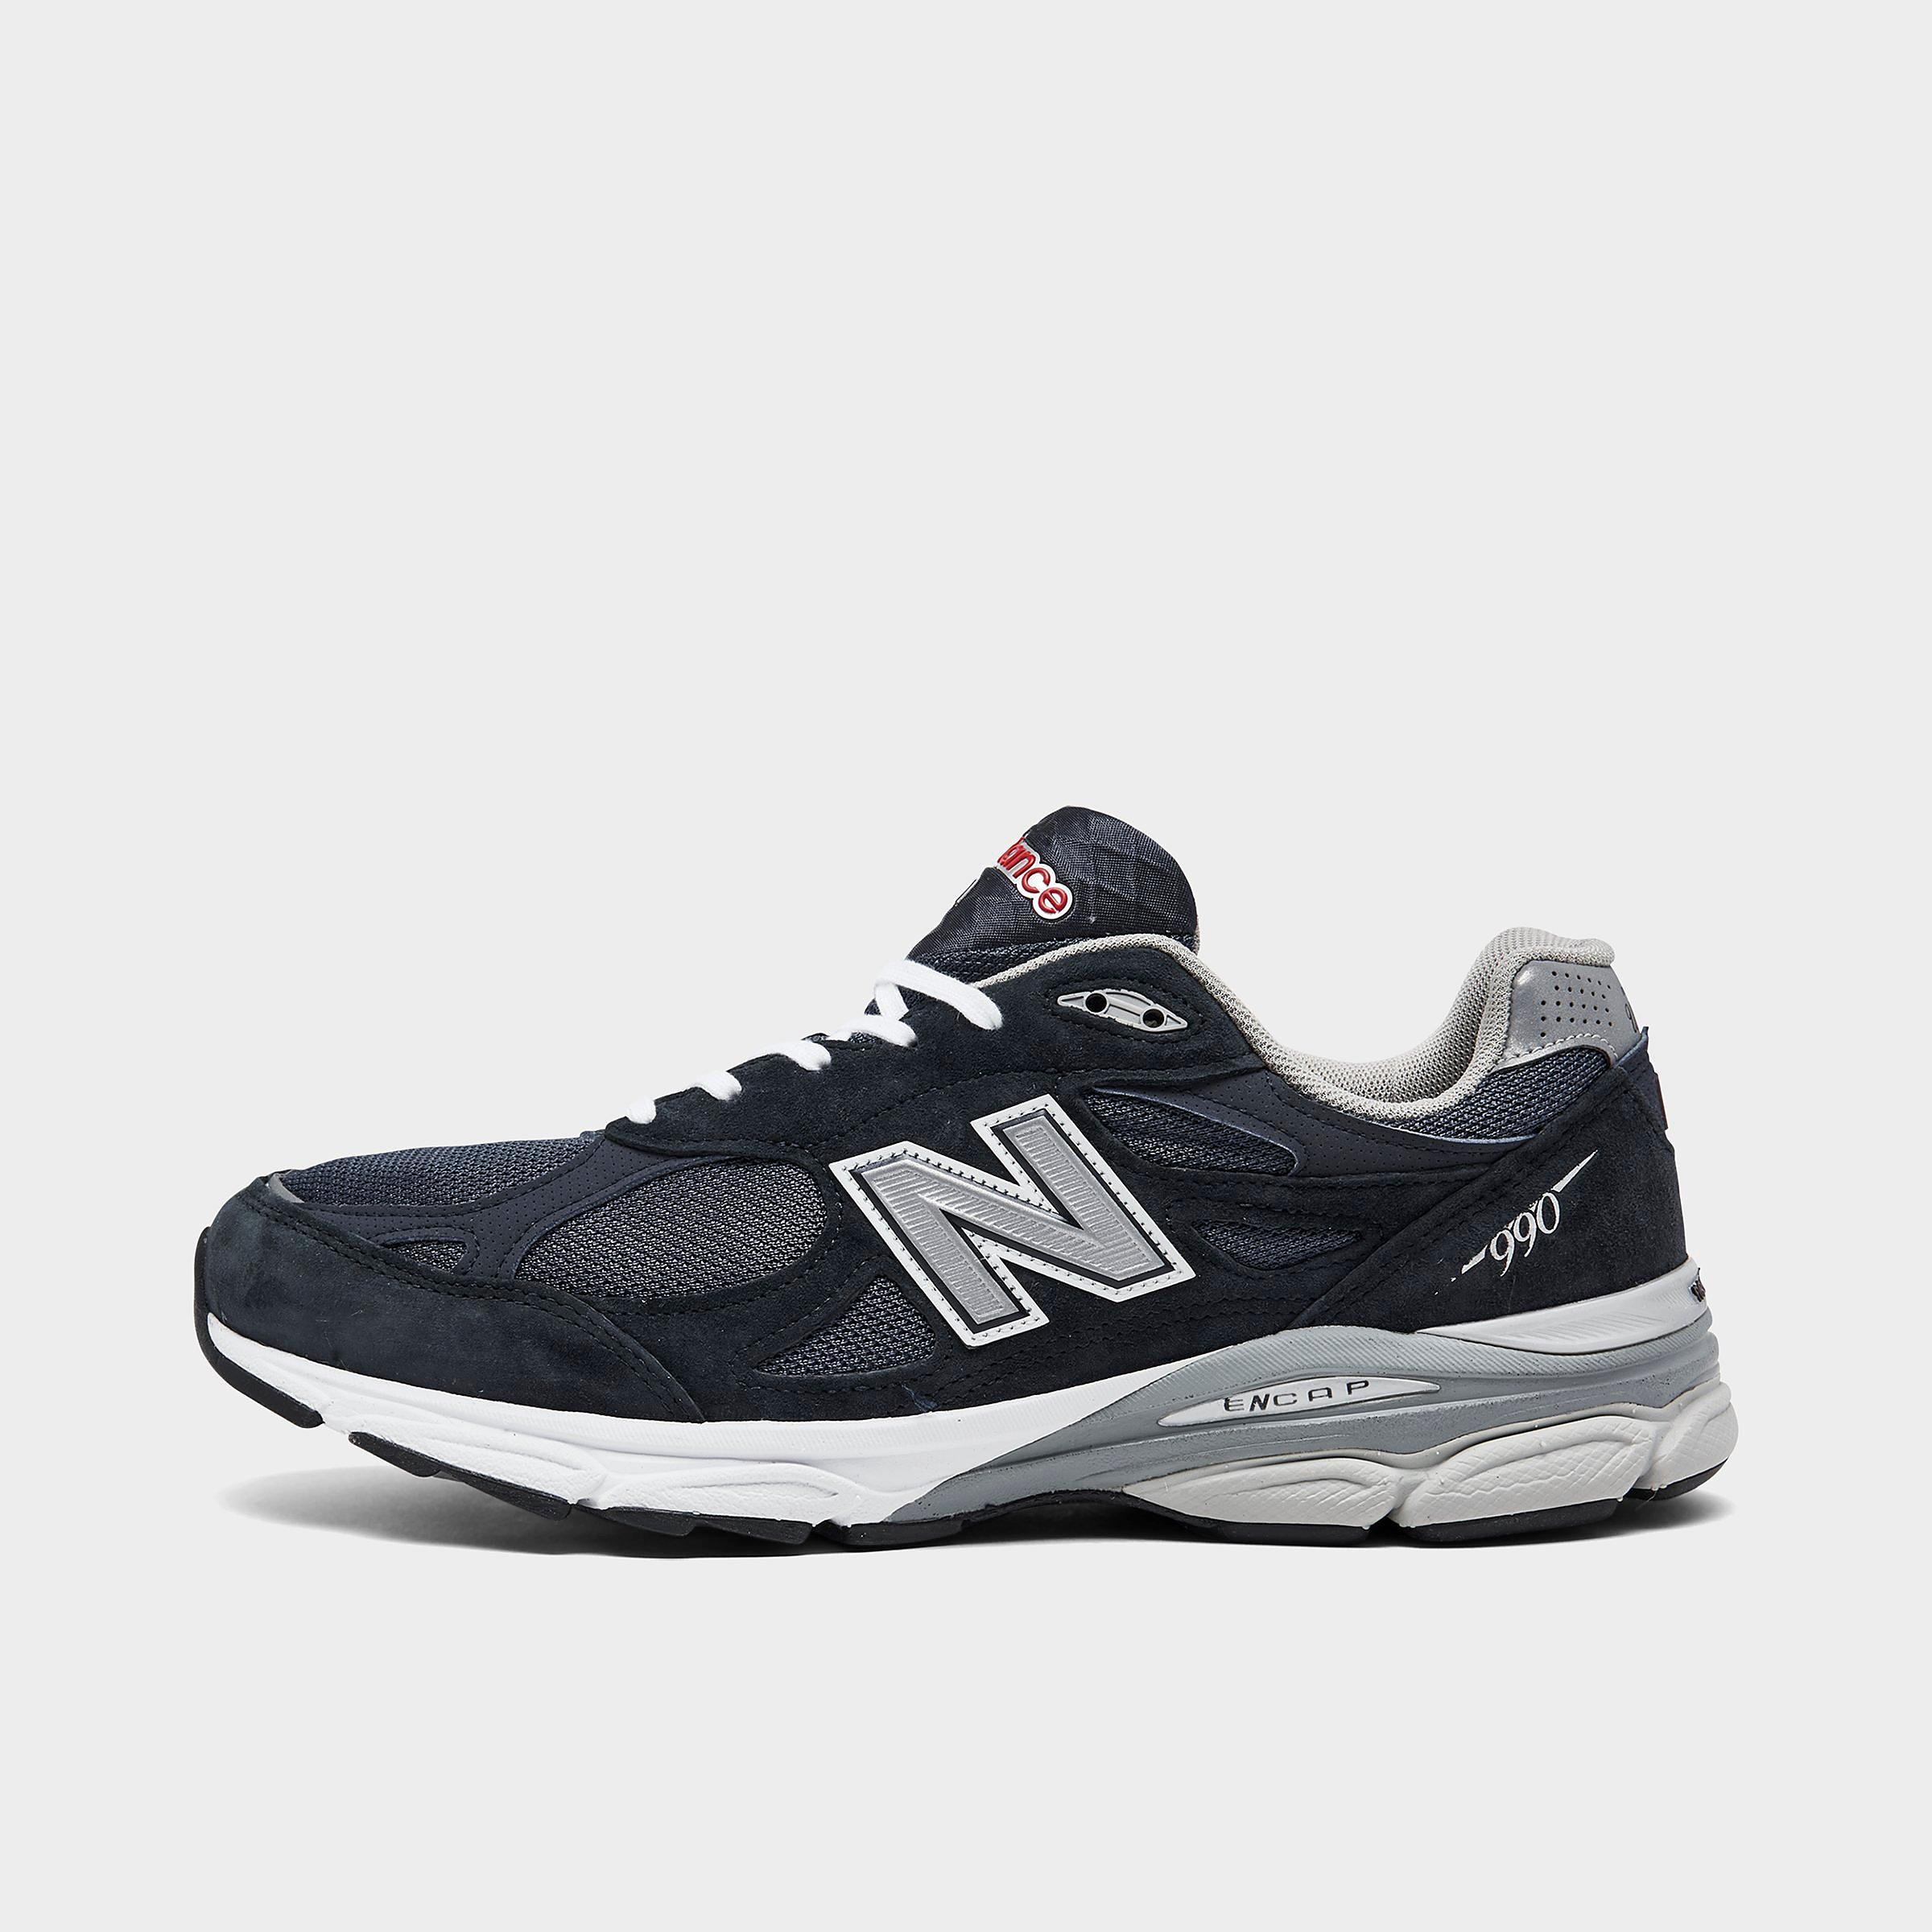 Mens New Balance 990v3 Running Shoes